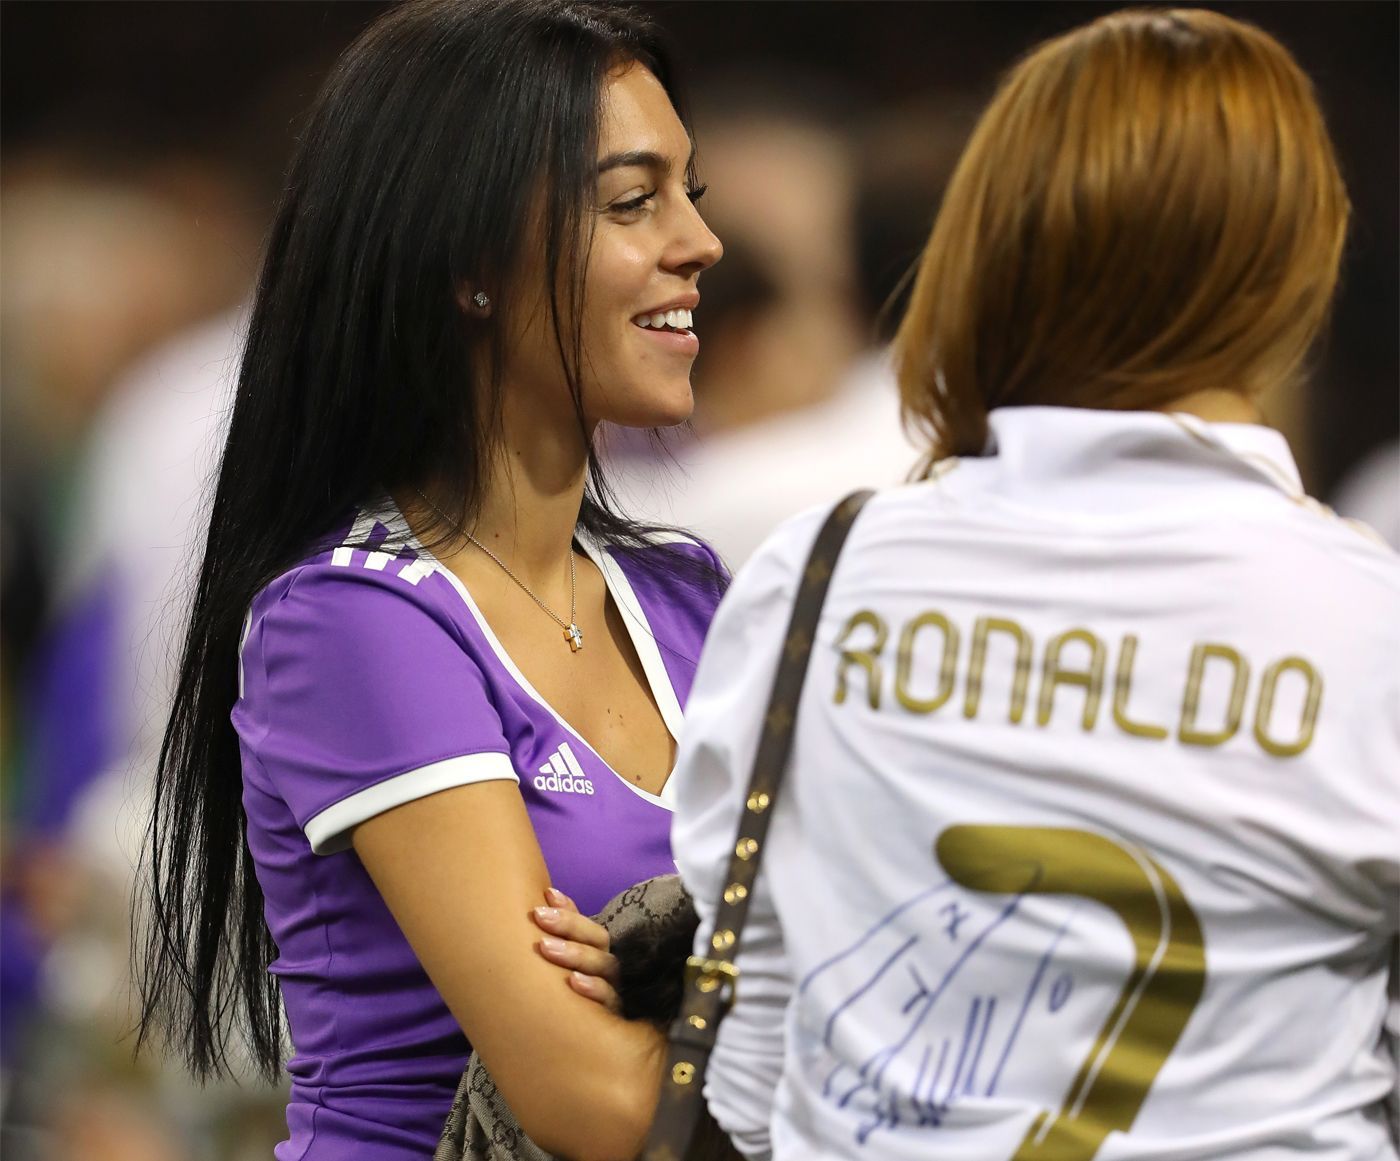 Cristiano Ronaldo's long-term girlfriend Georgina Rodriguez